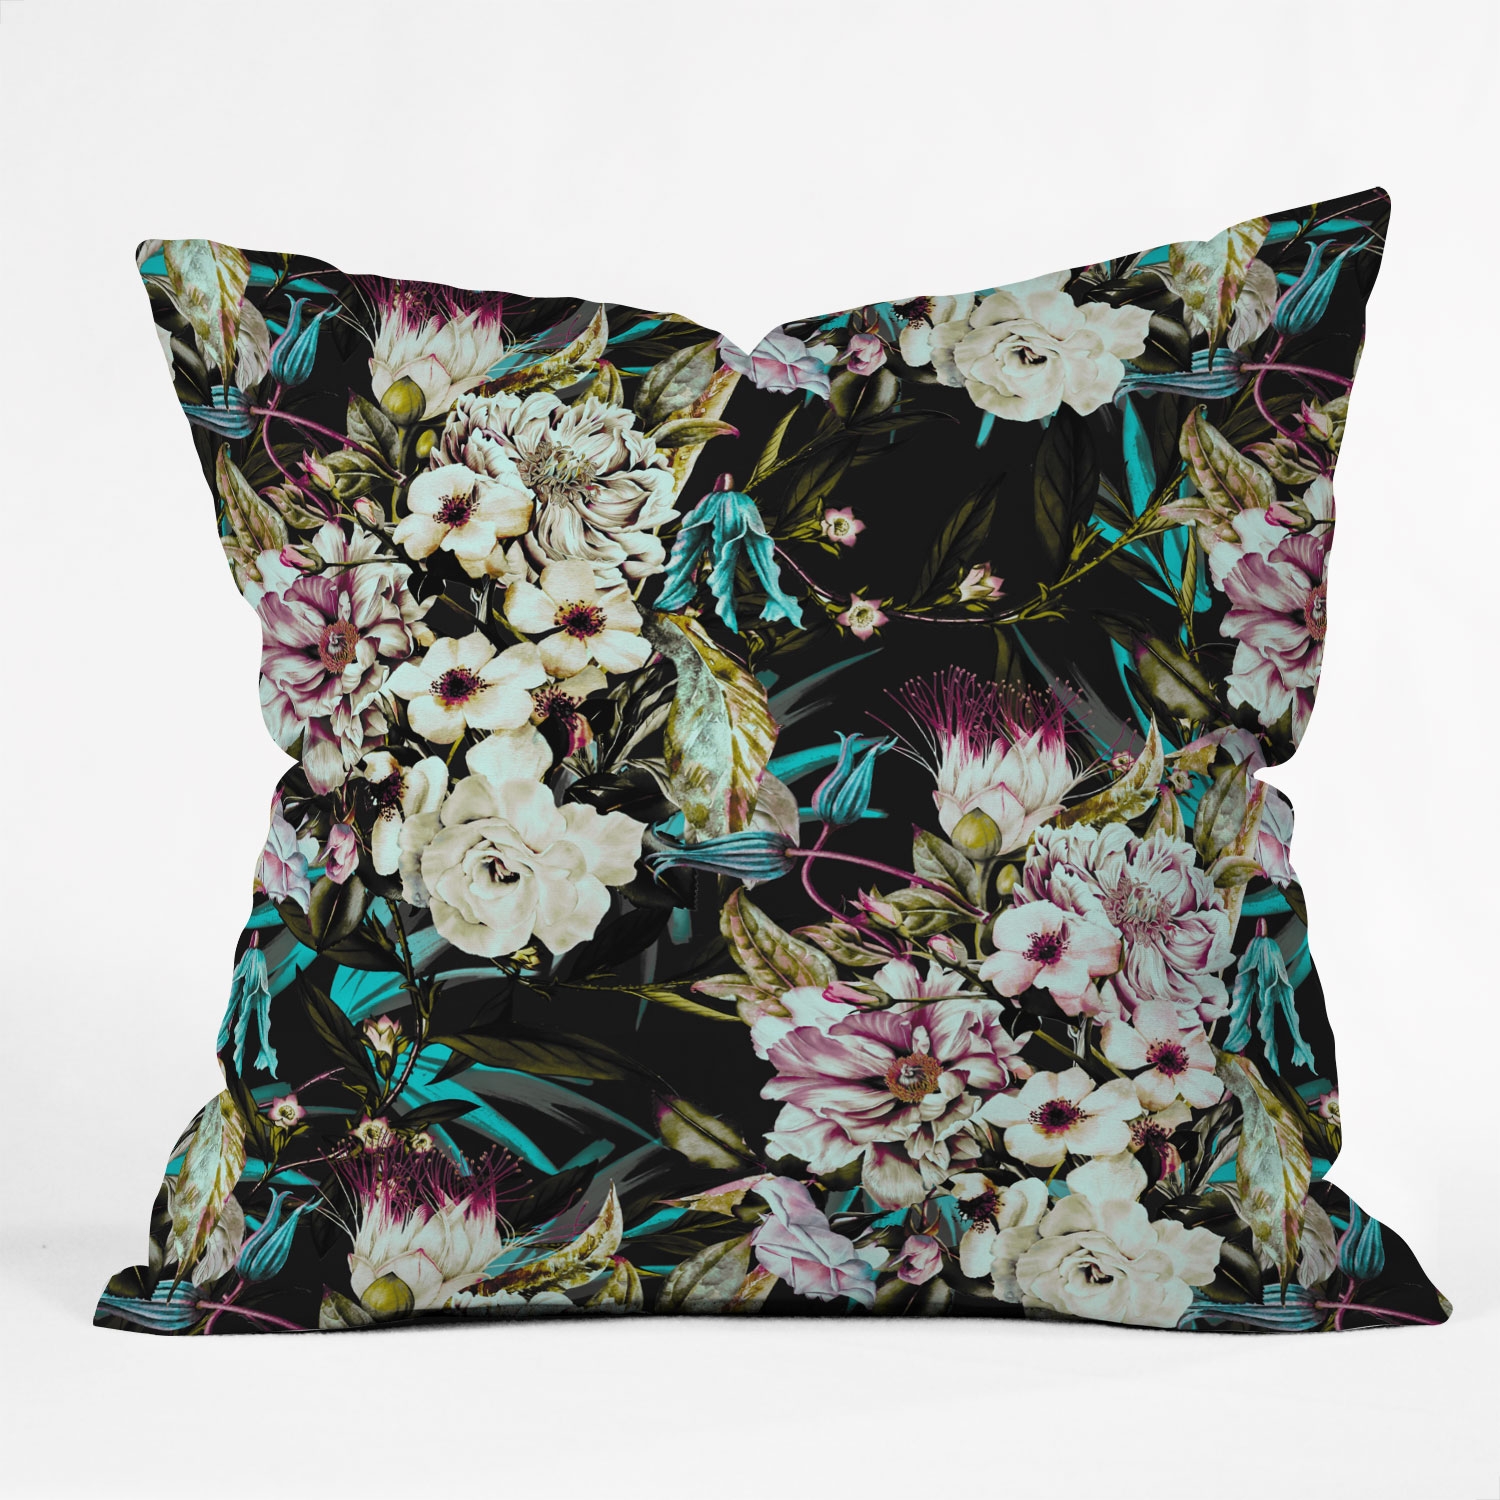 Dark Wild Floral 01 by Marta Barragan Camarasa - Outdoor Throw Pillow 18" x 18" - Image 1